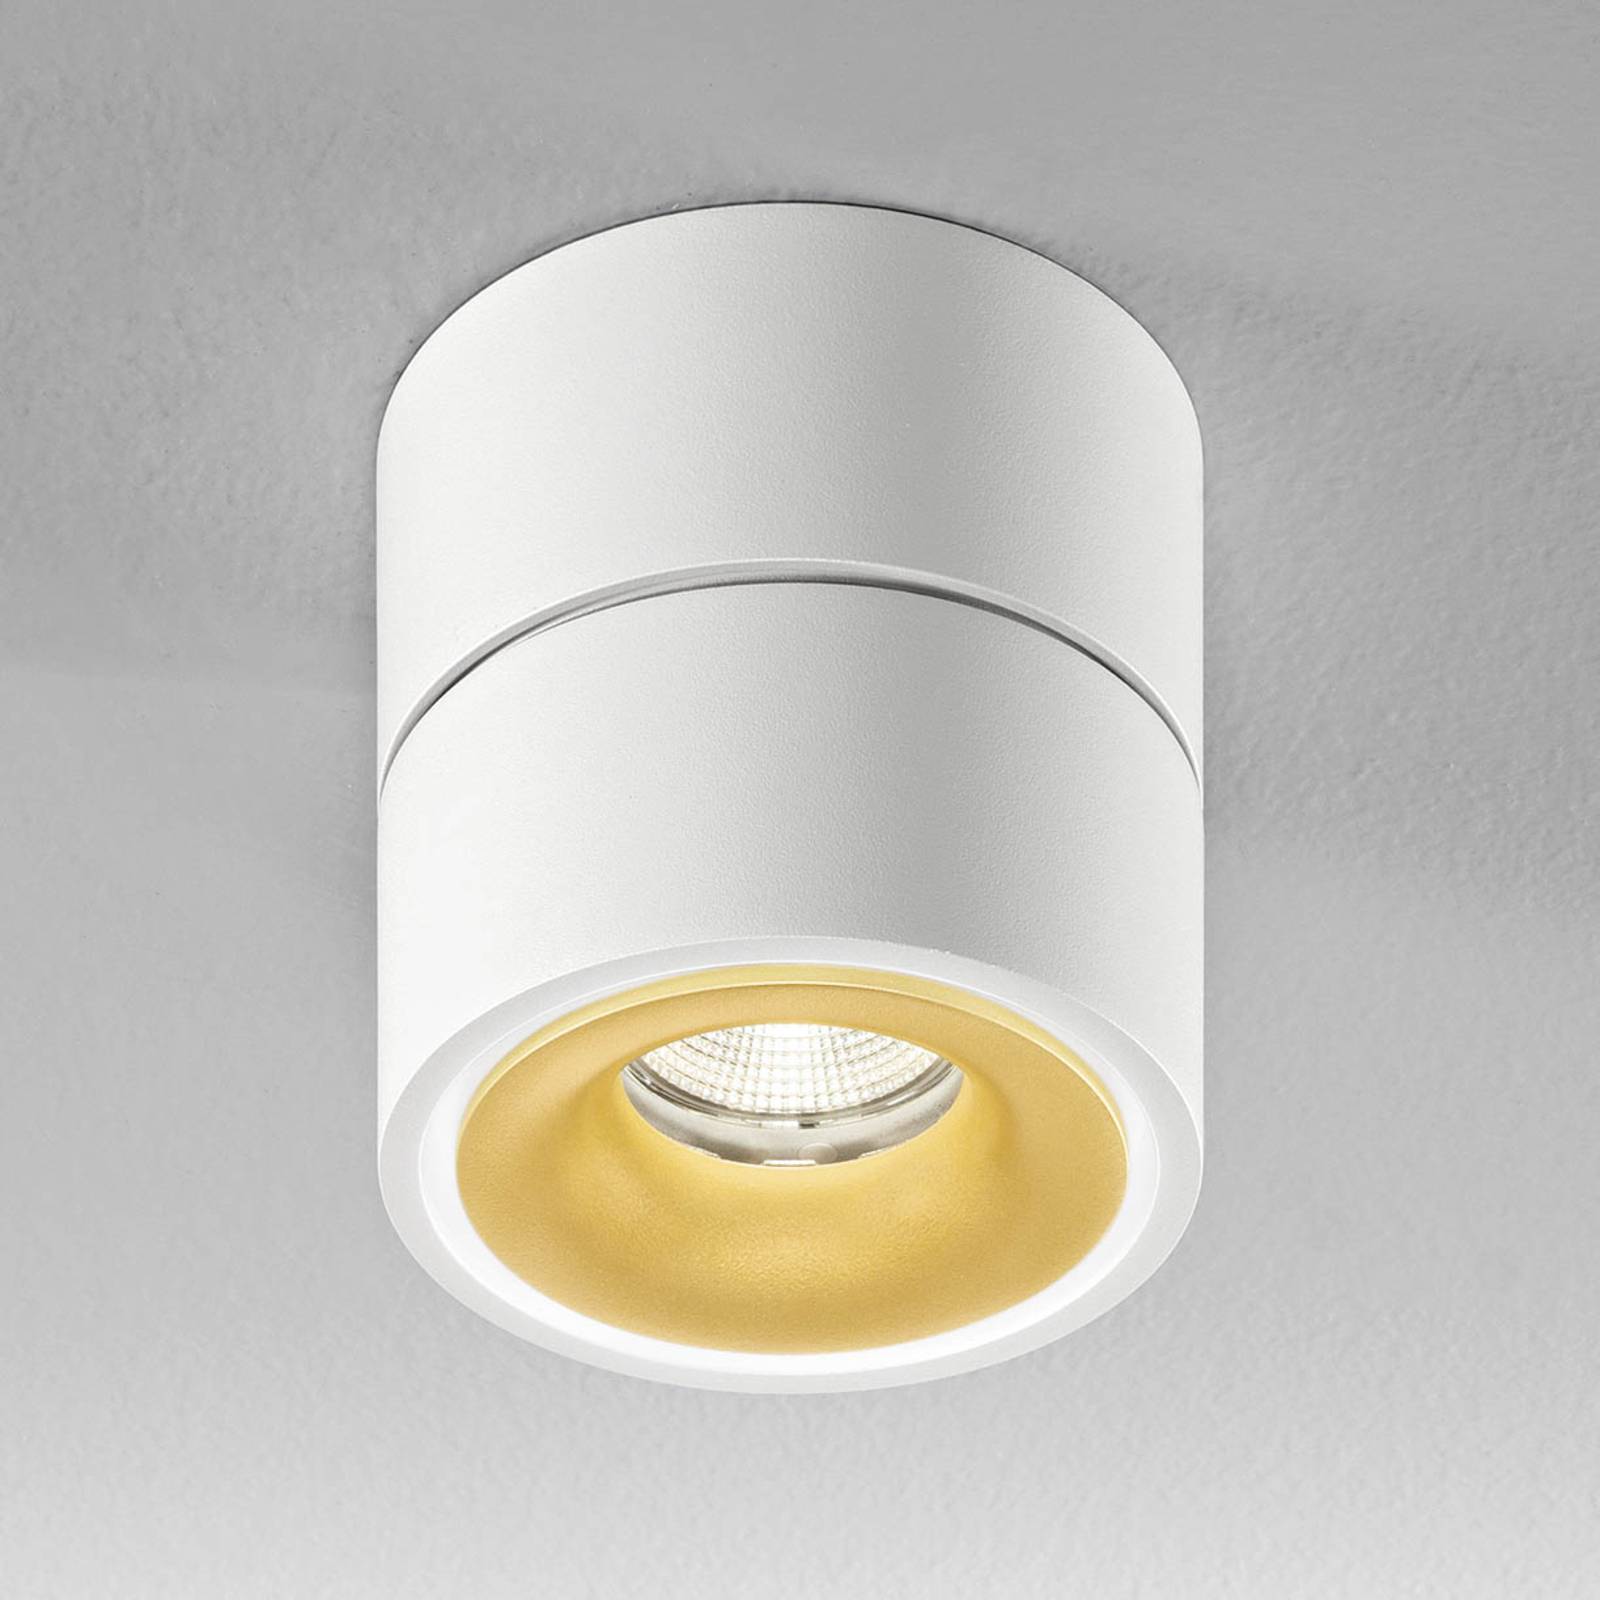 Egger Licht Egger Clippo S spot pour plafond LED, blanc/doré